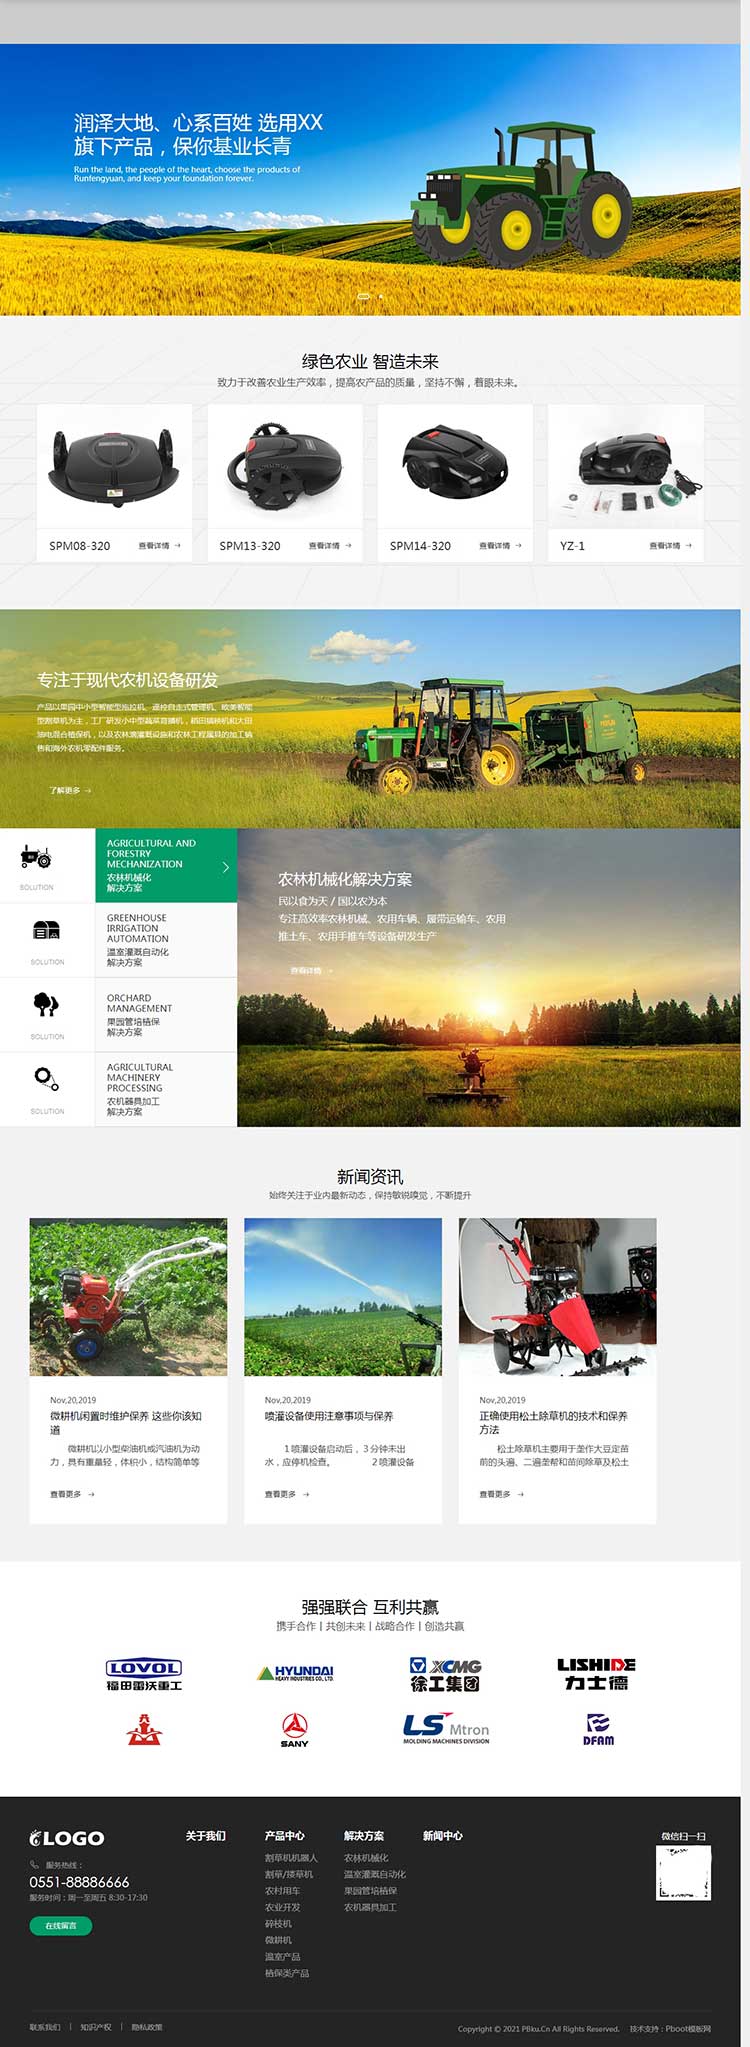 h5自适应大气绿色农机设备品牌官网html响应式PBOOTCMS网站模板机器PB源码